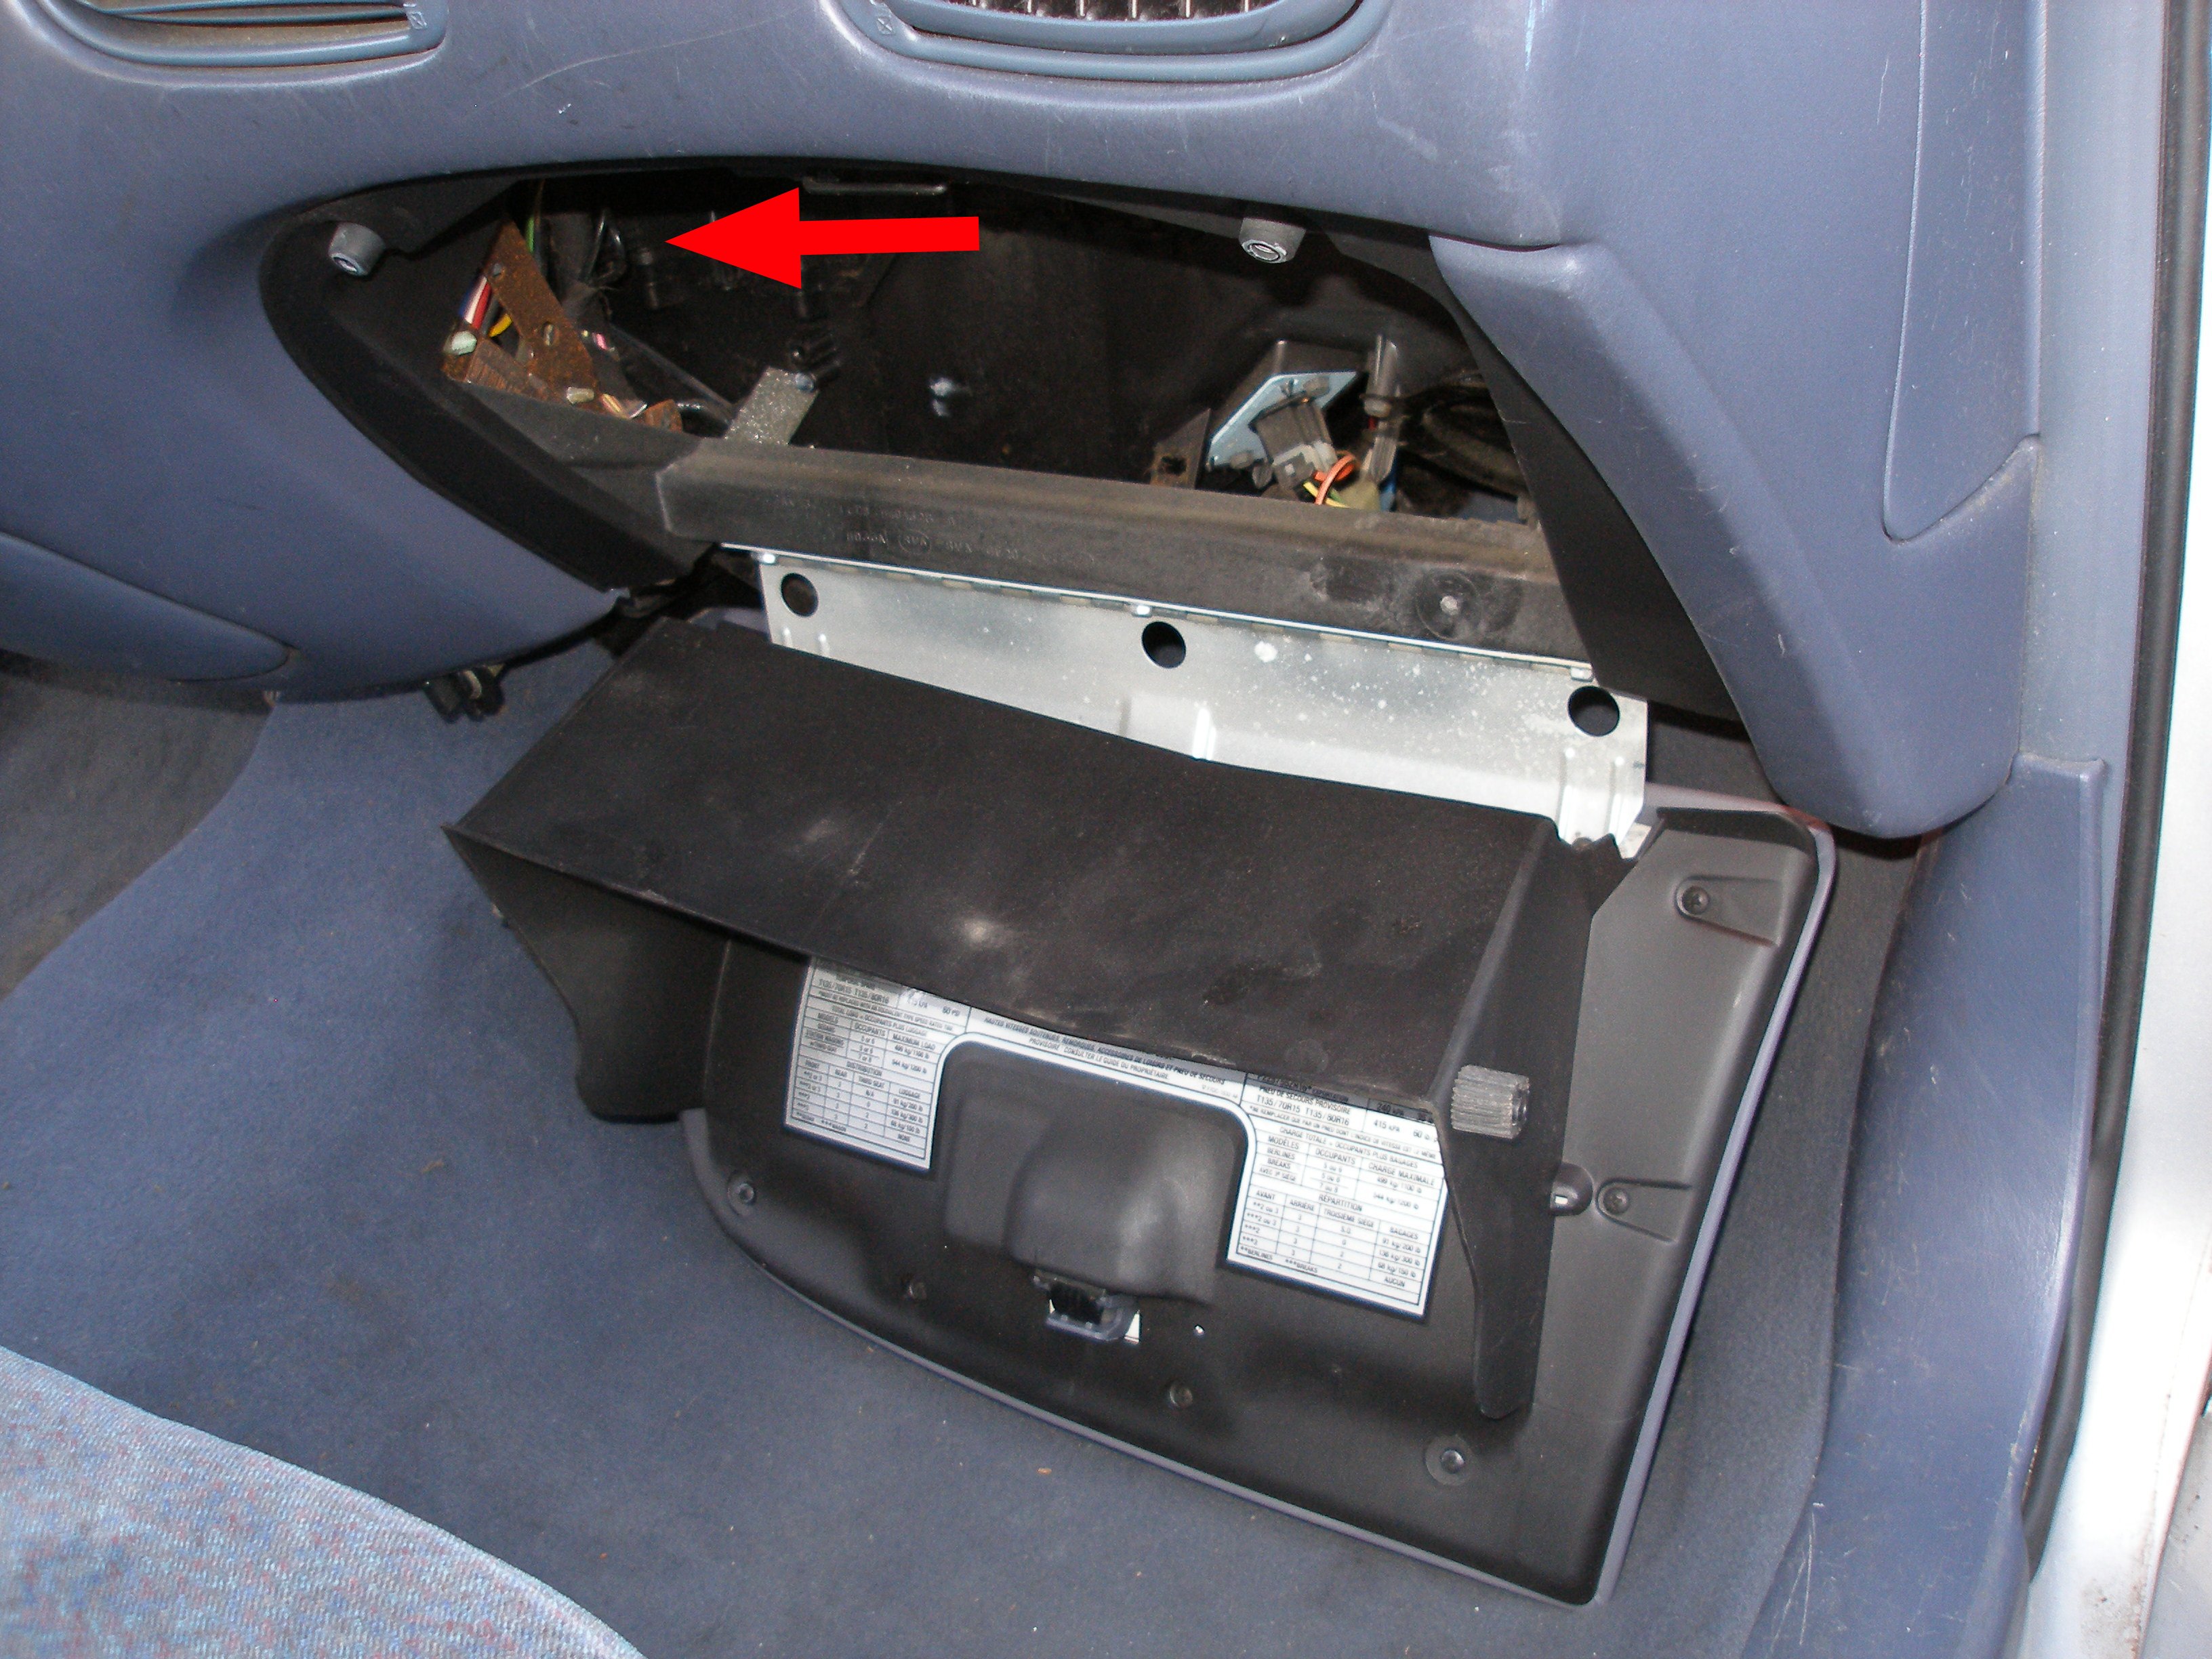 97 Ford taurus heater problems #5